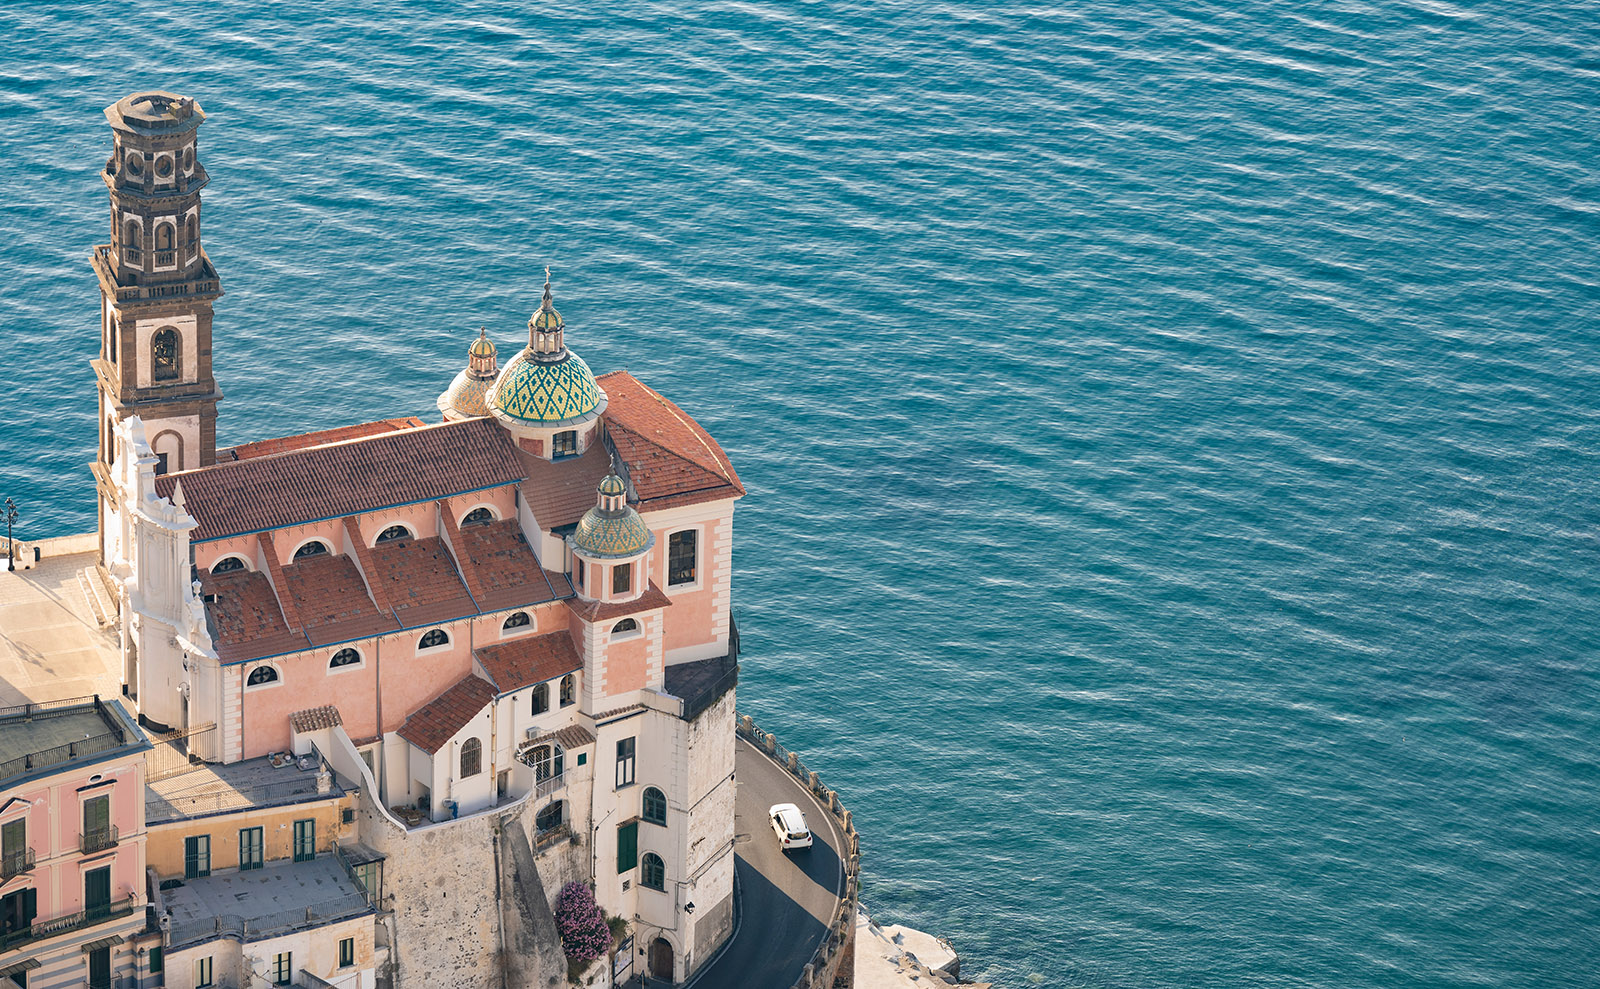 Take a Lyrical Trip to the Italian Coast with 'Amalfi' by Henry Wadsworth Longfellow